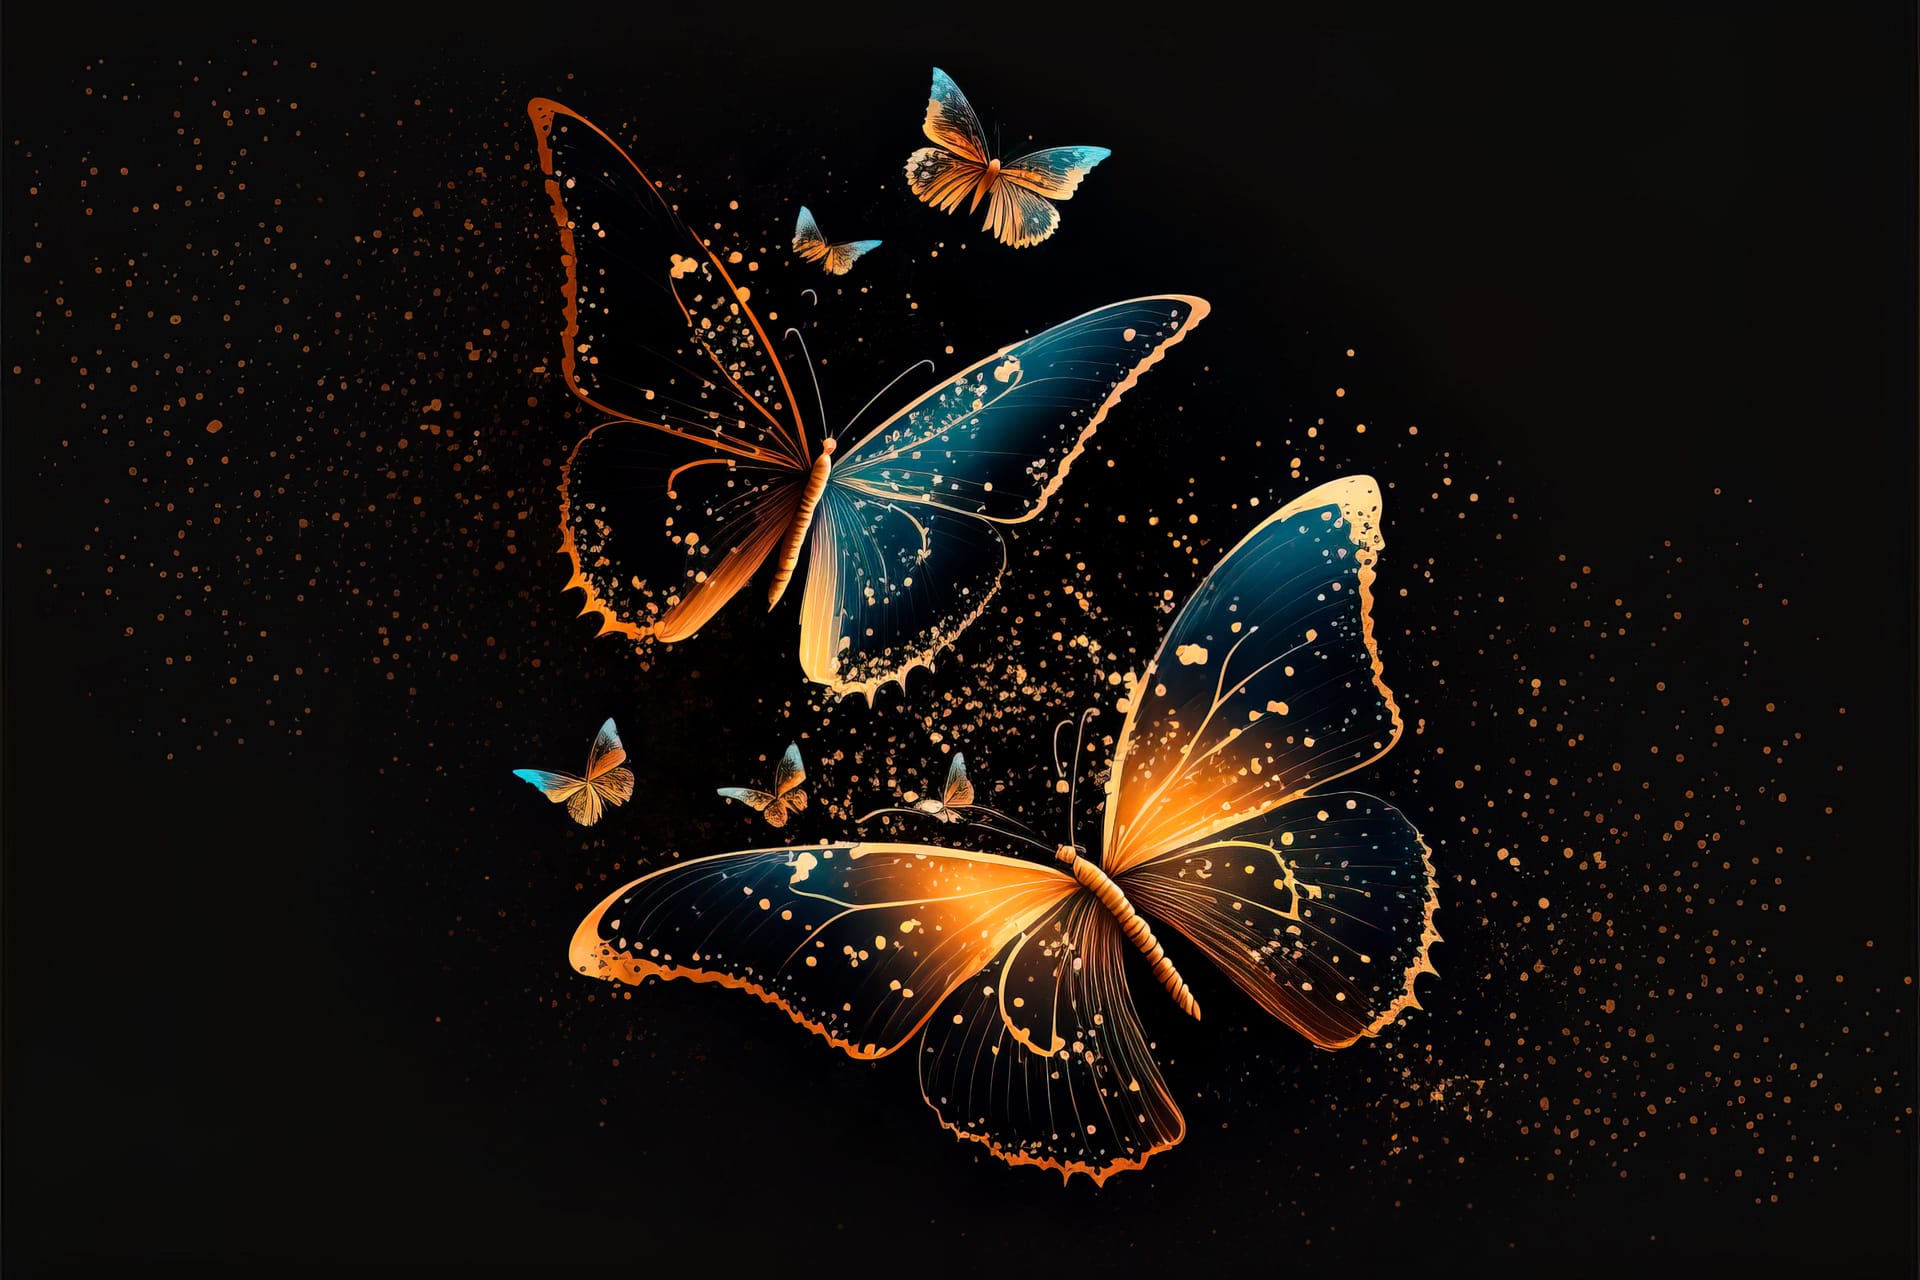 Butterfly image shiny decorative golden butterflies black background